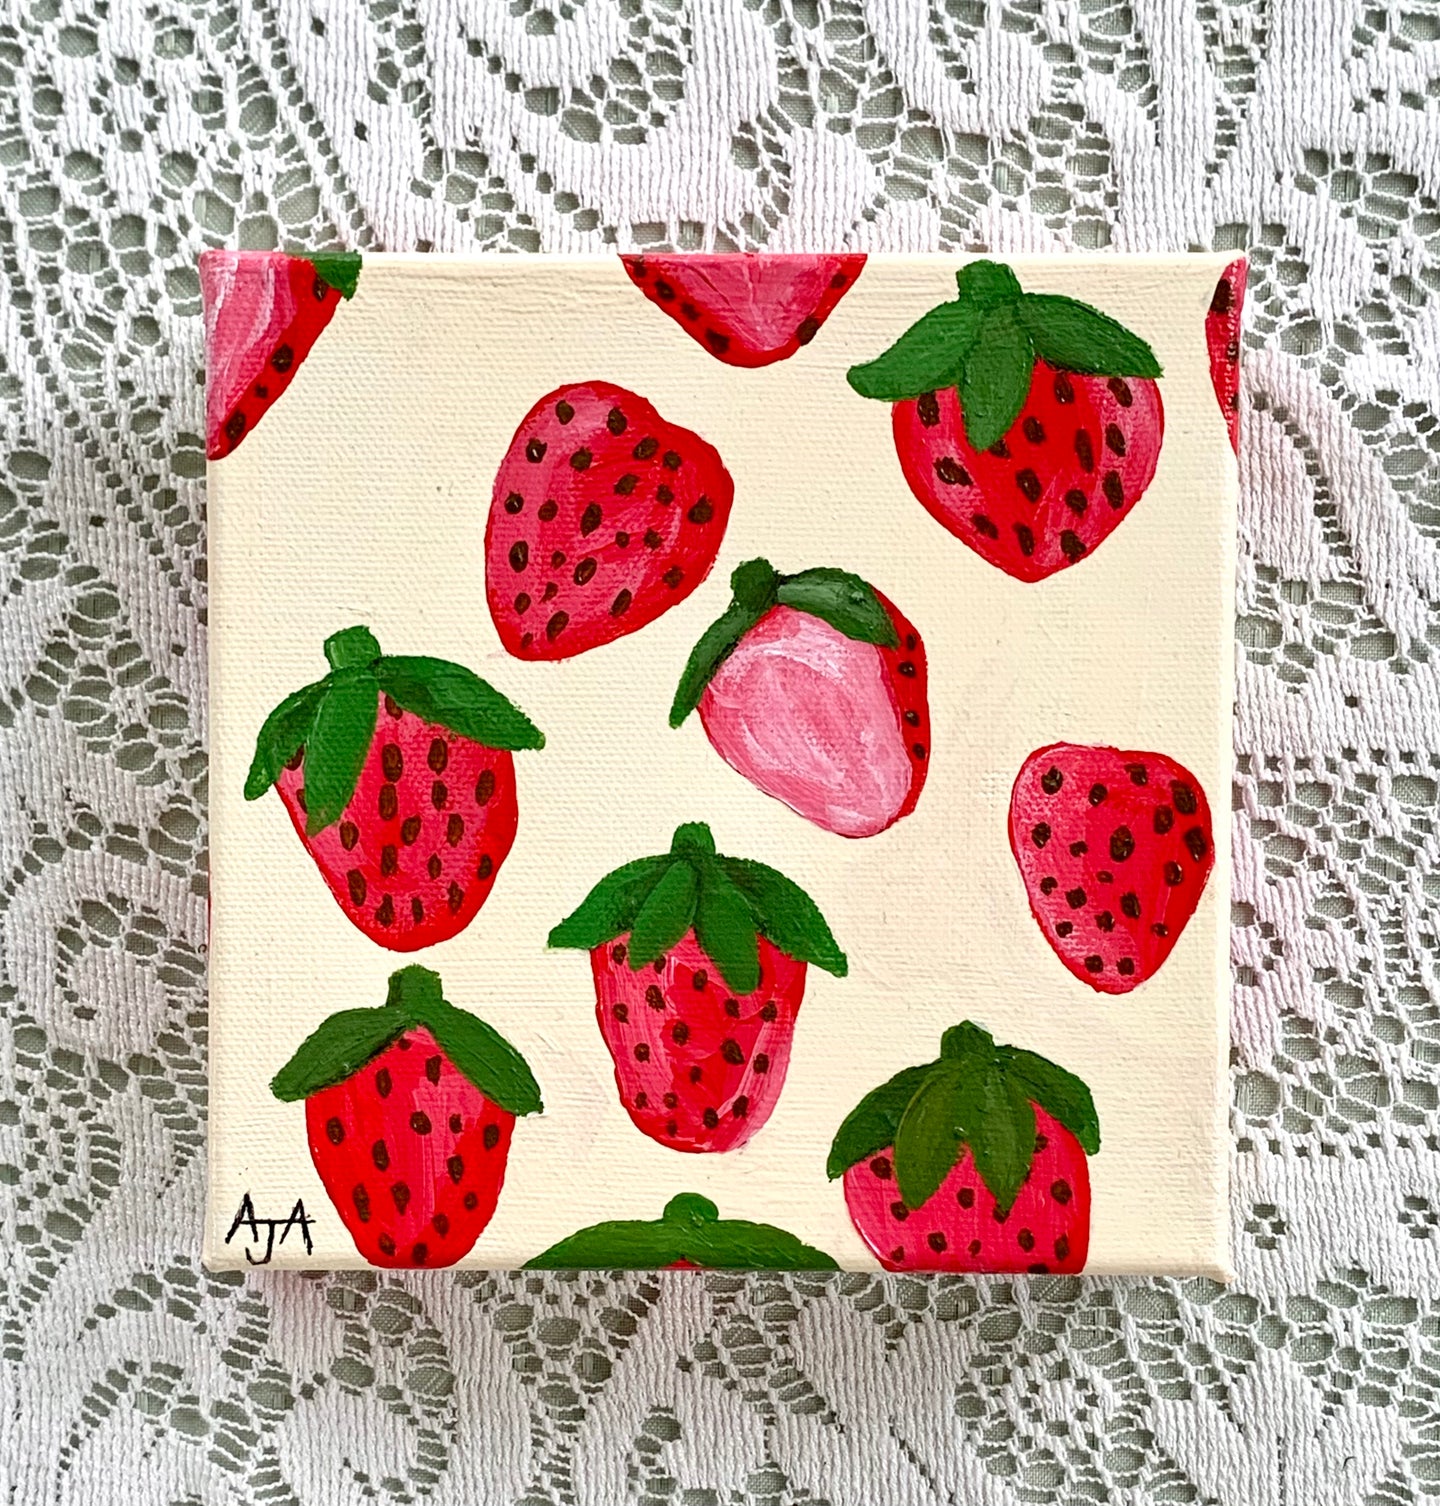 Strawberry painting